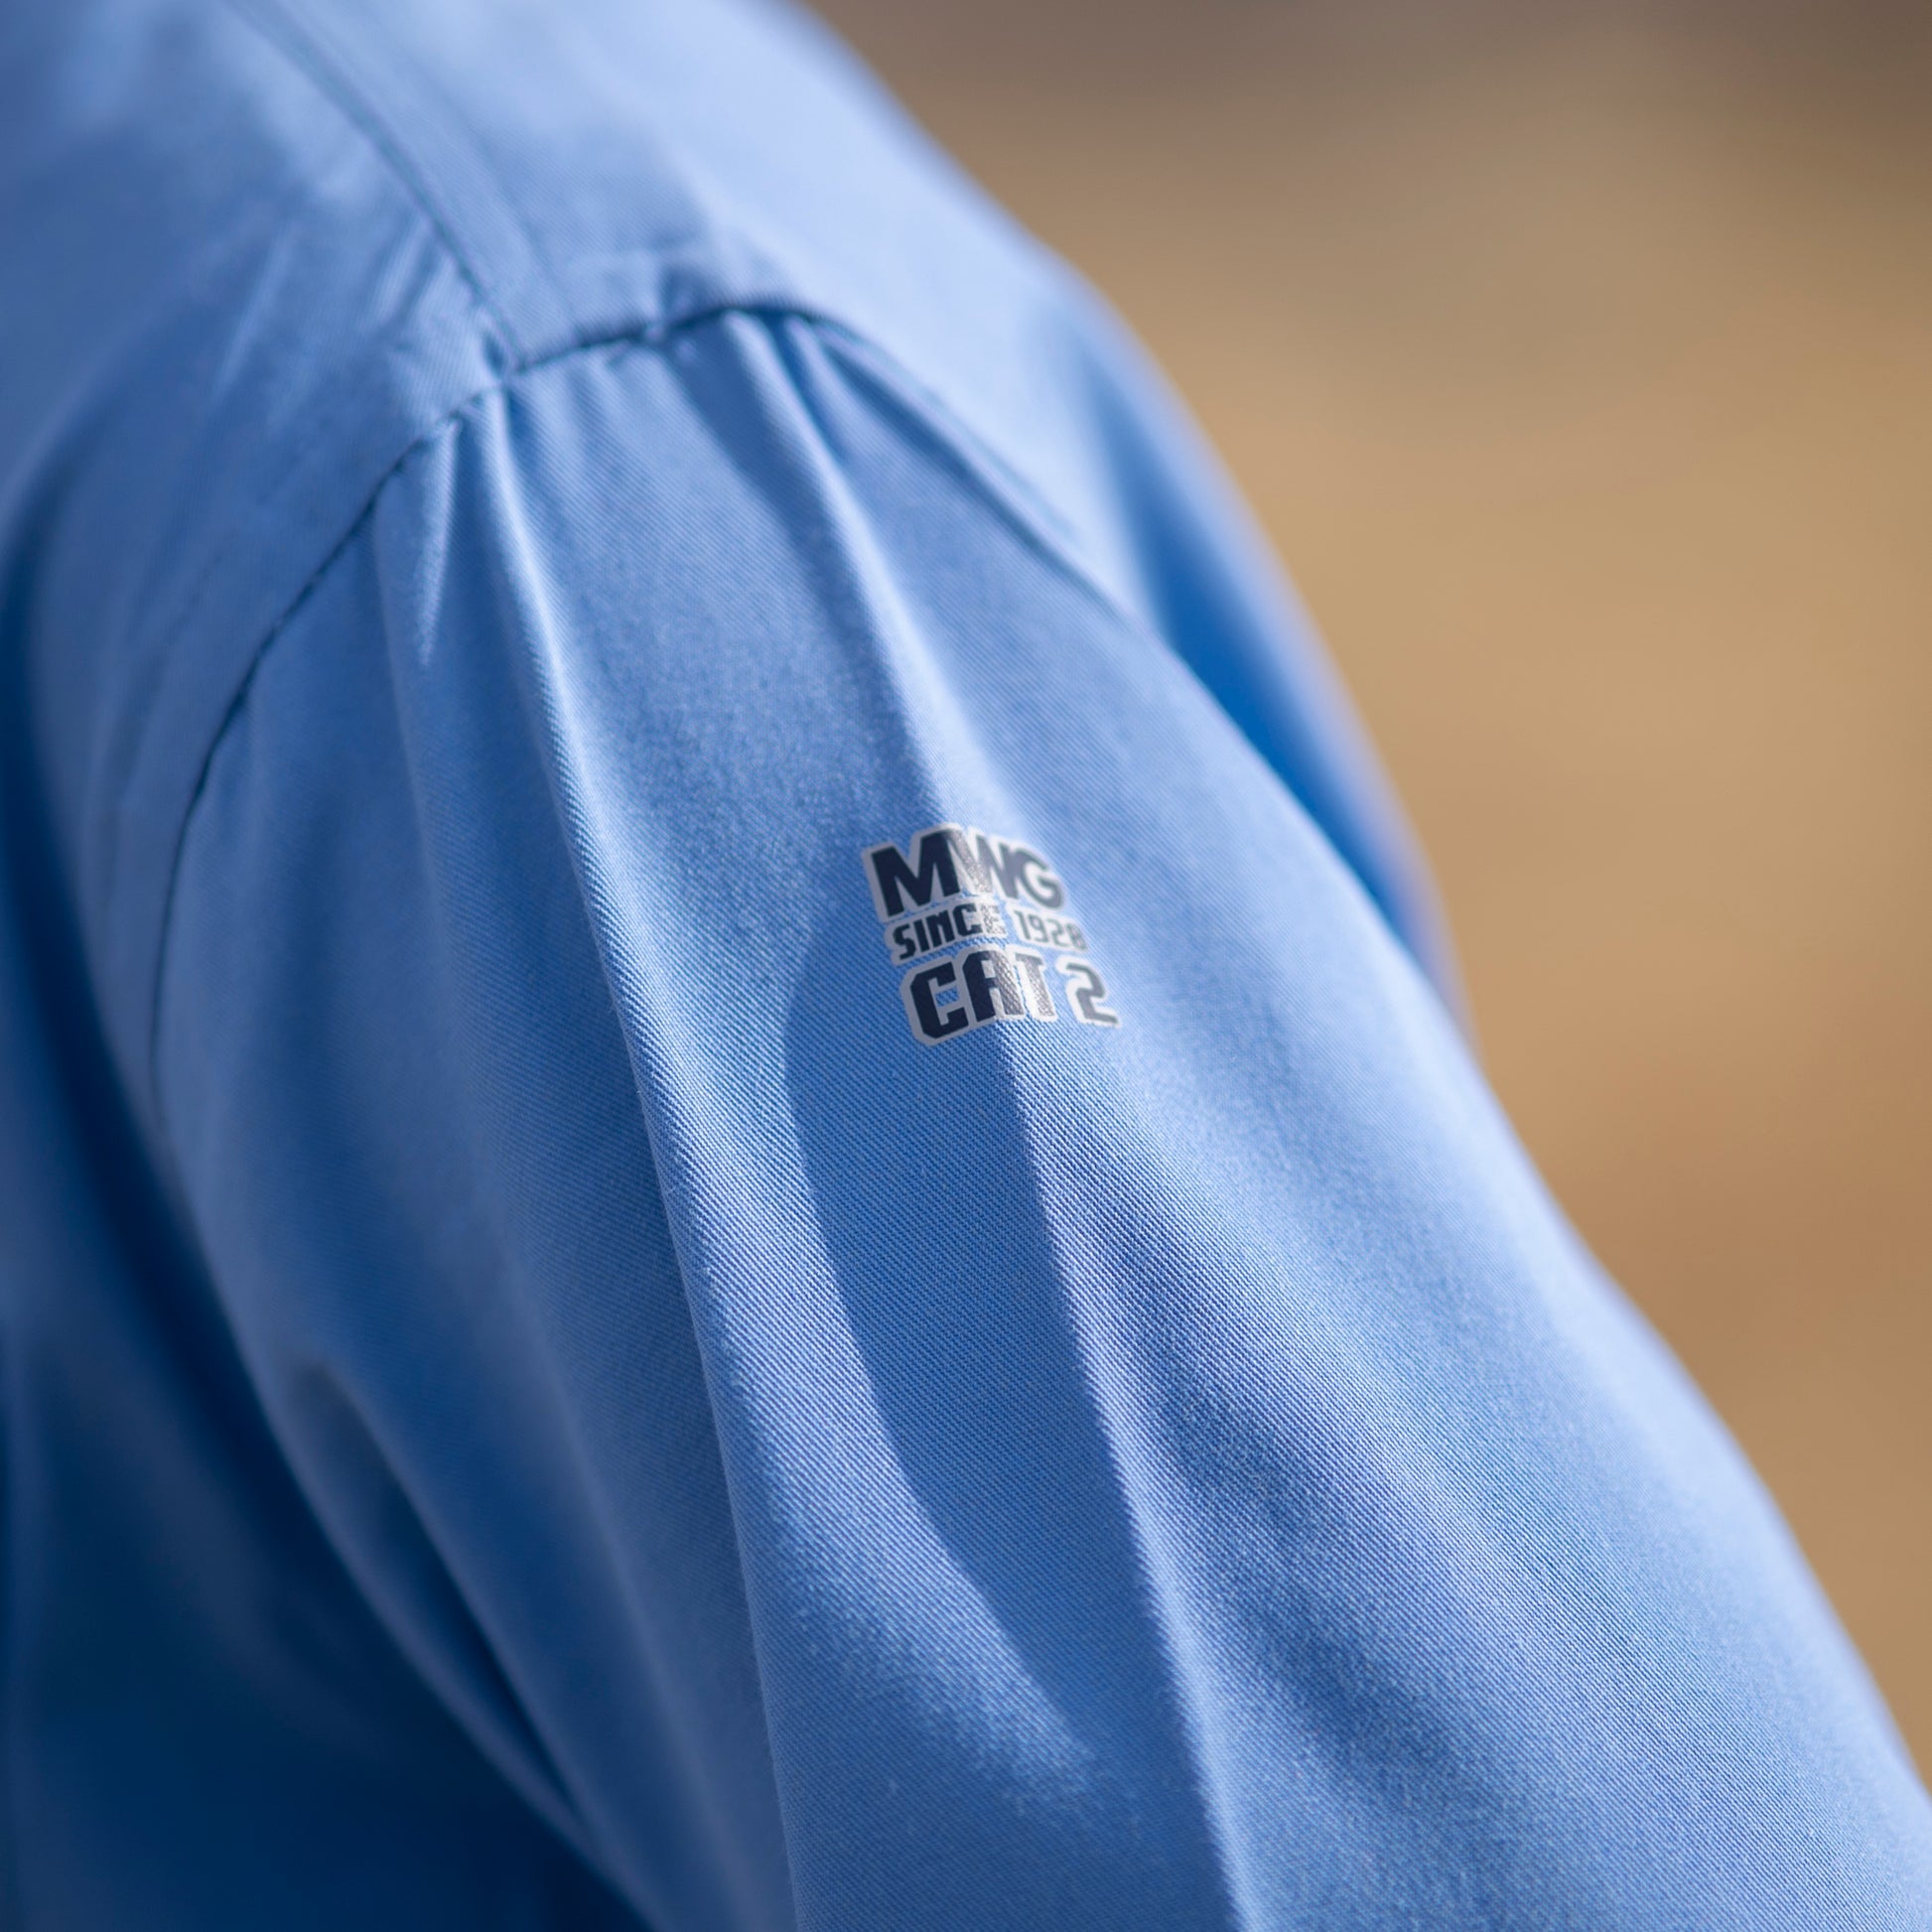 Close up image of MWG COMFORT WEAVE FR Uniform Shirt in light blue. Image displays MWG logo on sleeve with CAT 2 identification, symbolizing level of flame-resistance.